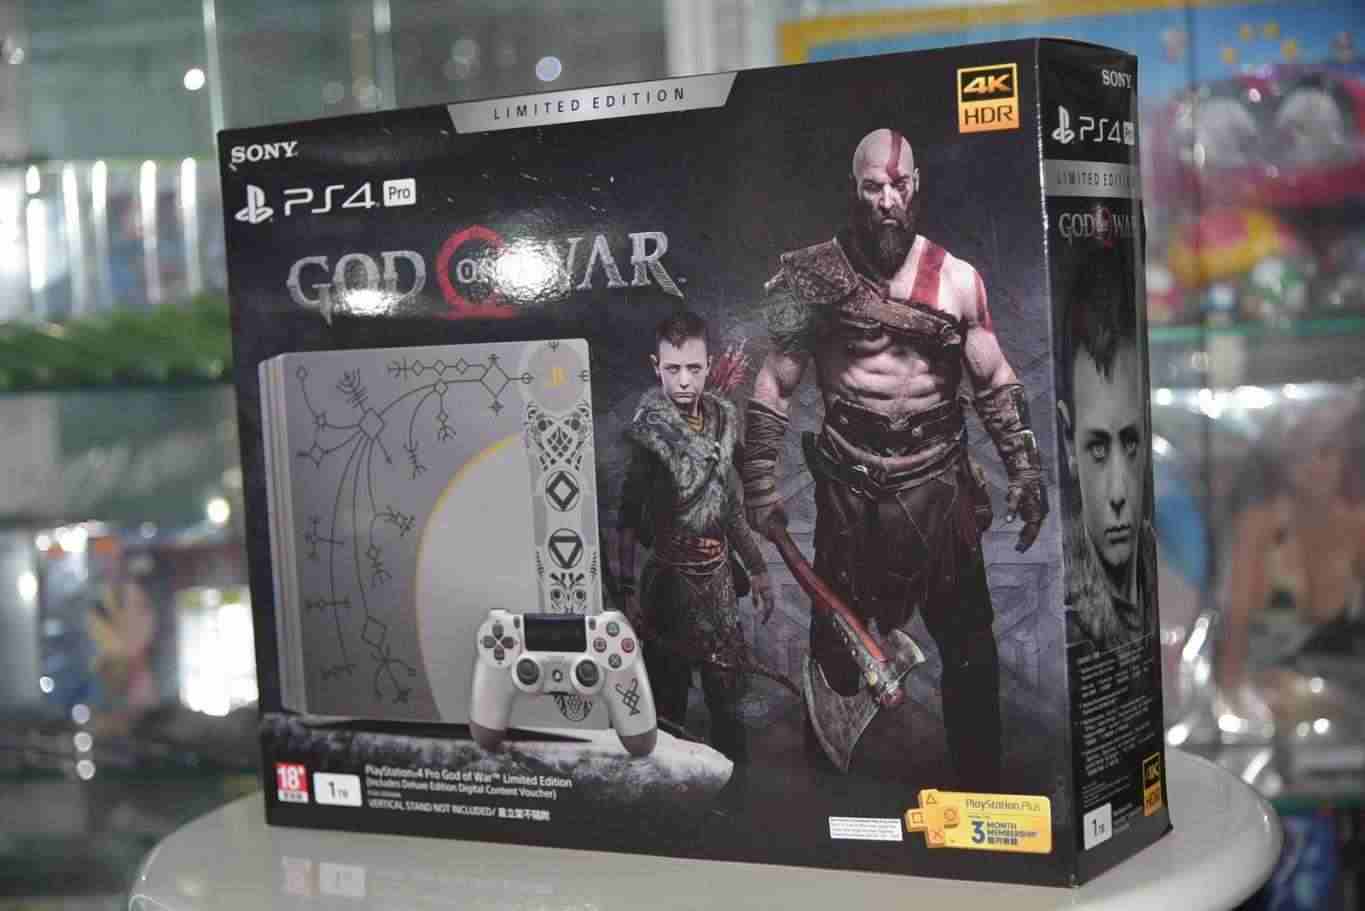  PlayStation 4  Pro 1TB God of War Limited Edition